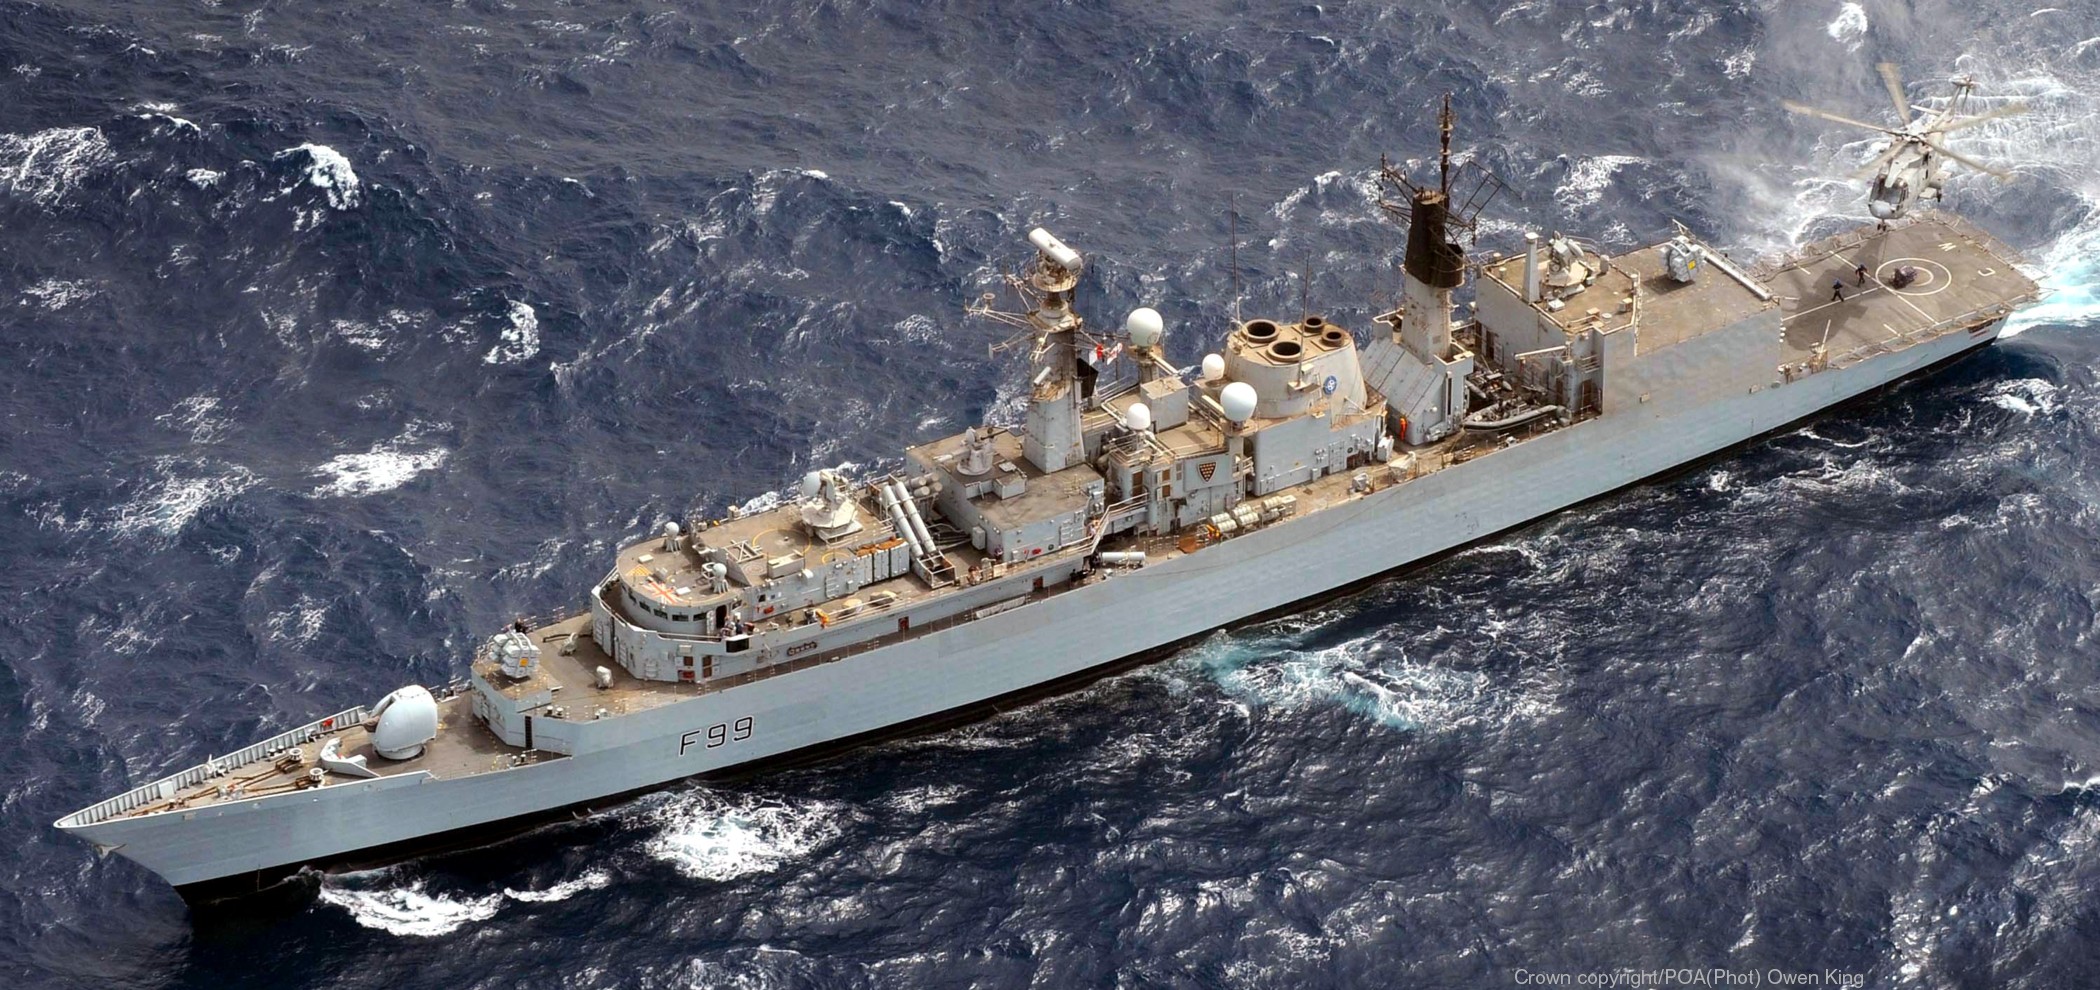 hms cornwall f 99 broadsword class type 22 frigate royal navy